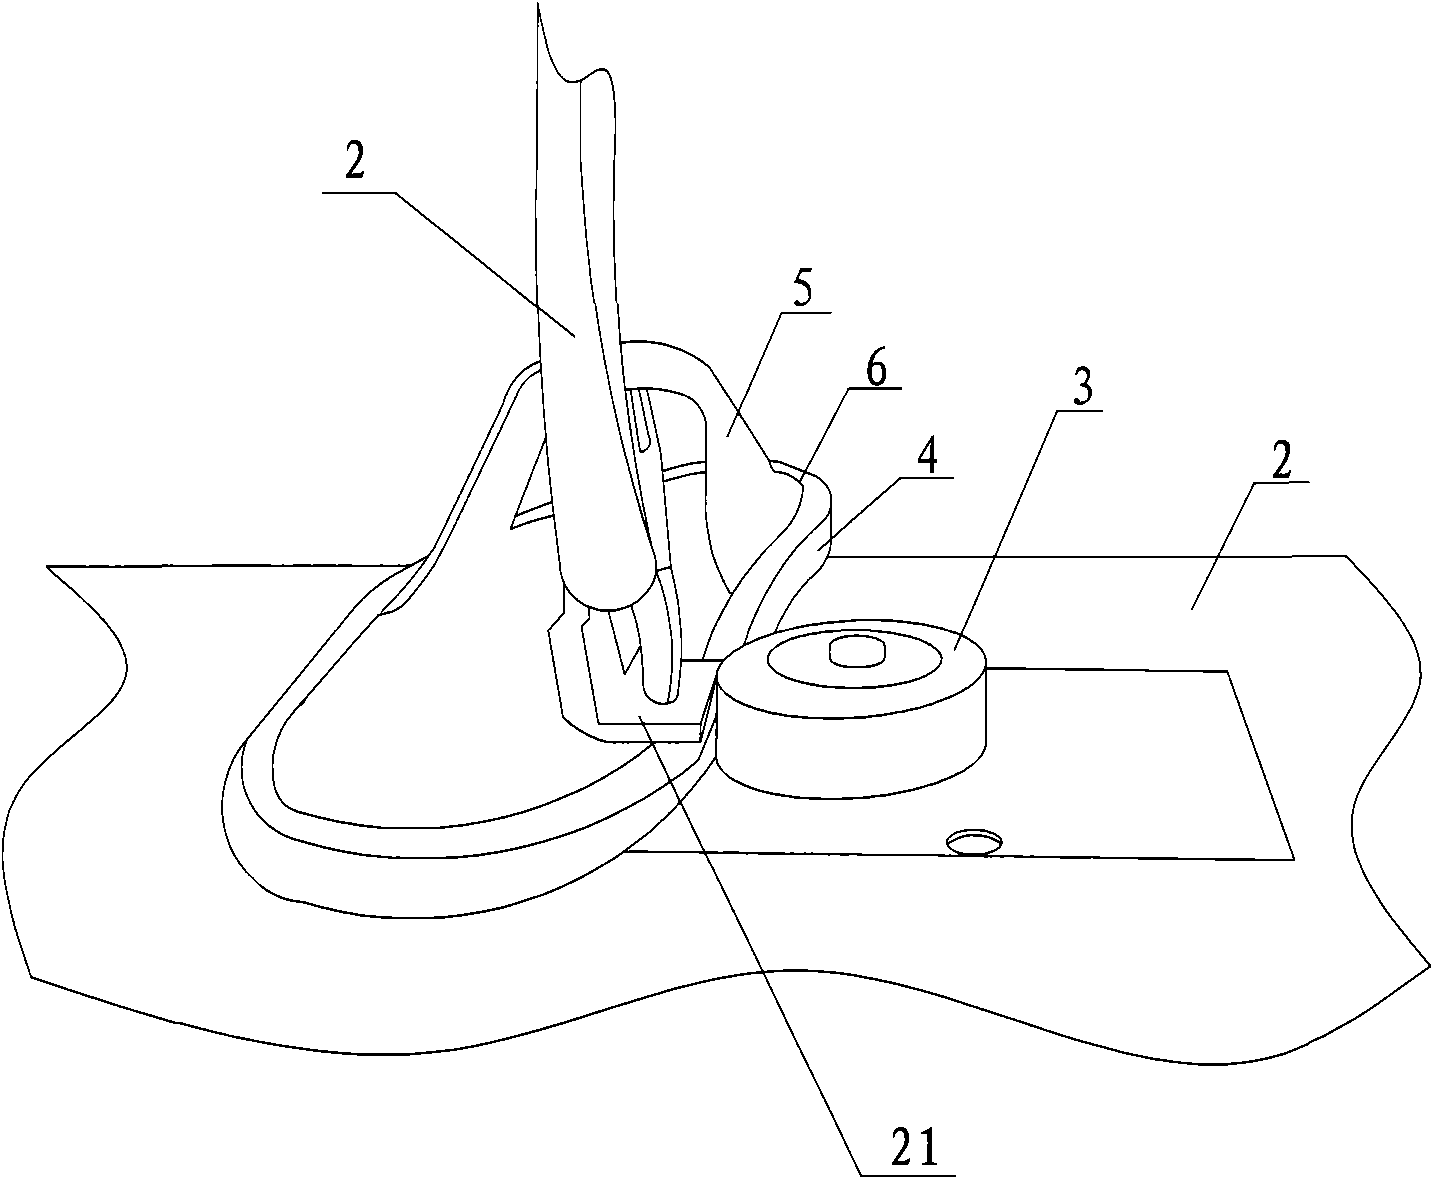 Shoemaking sewing machine